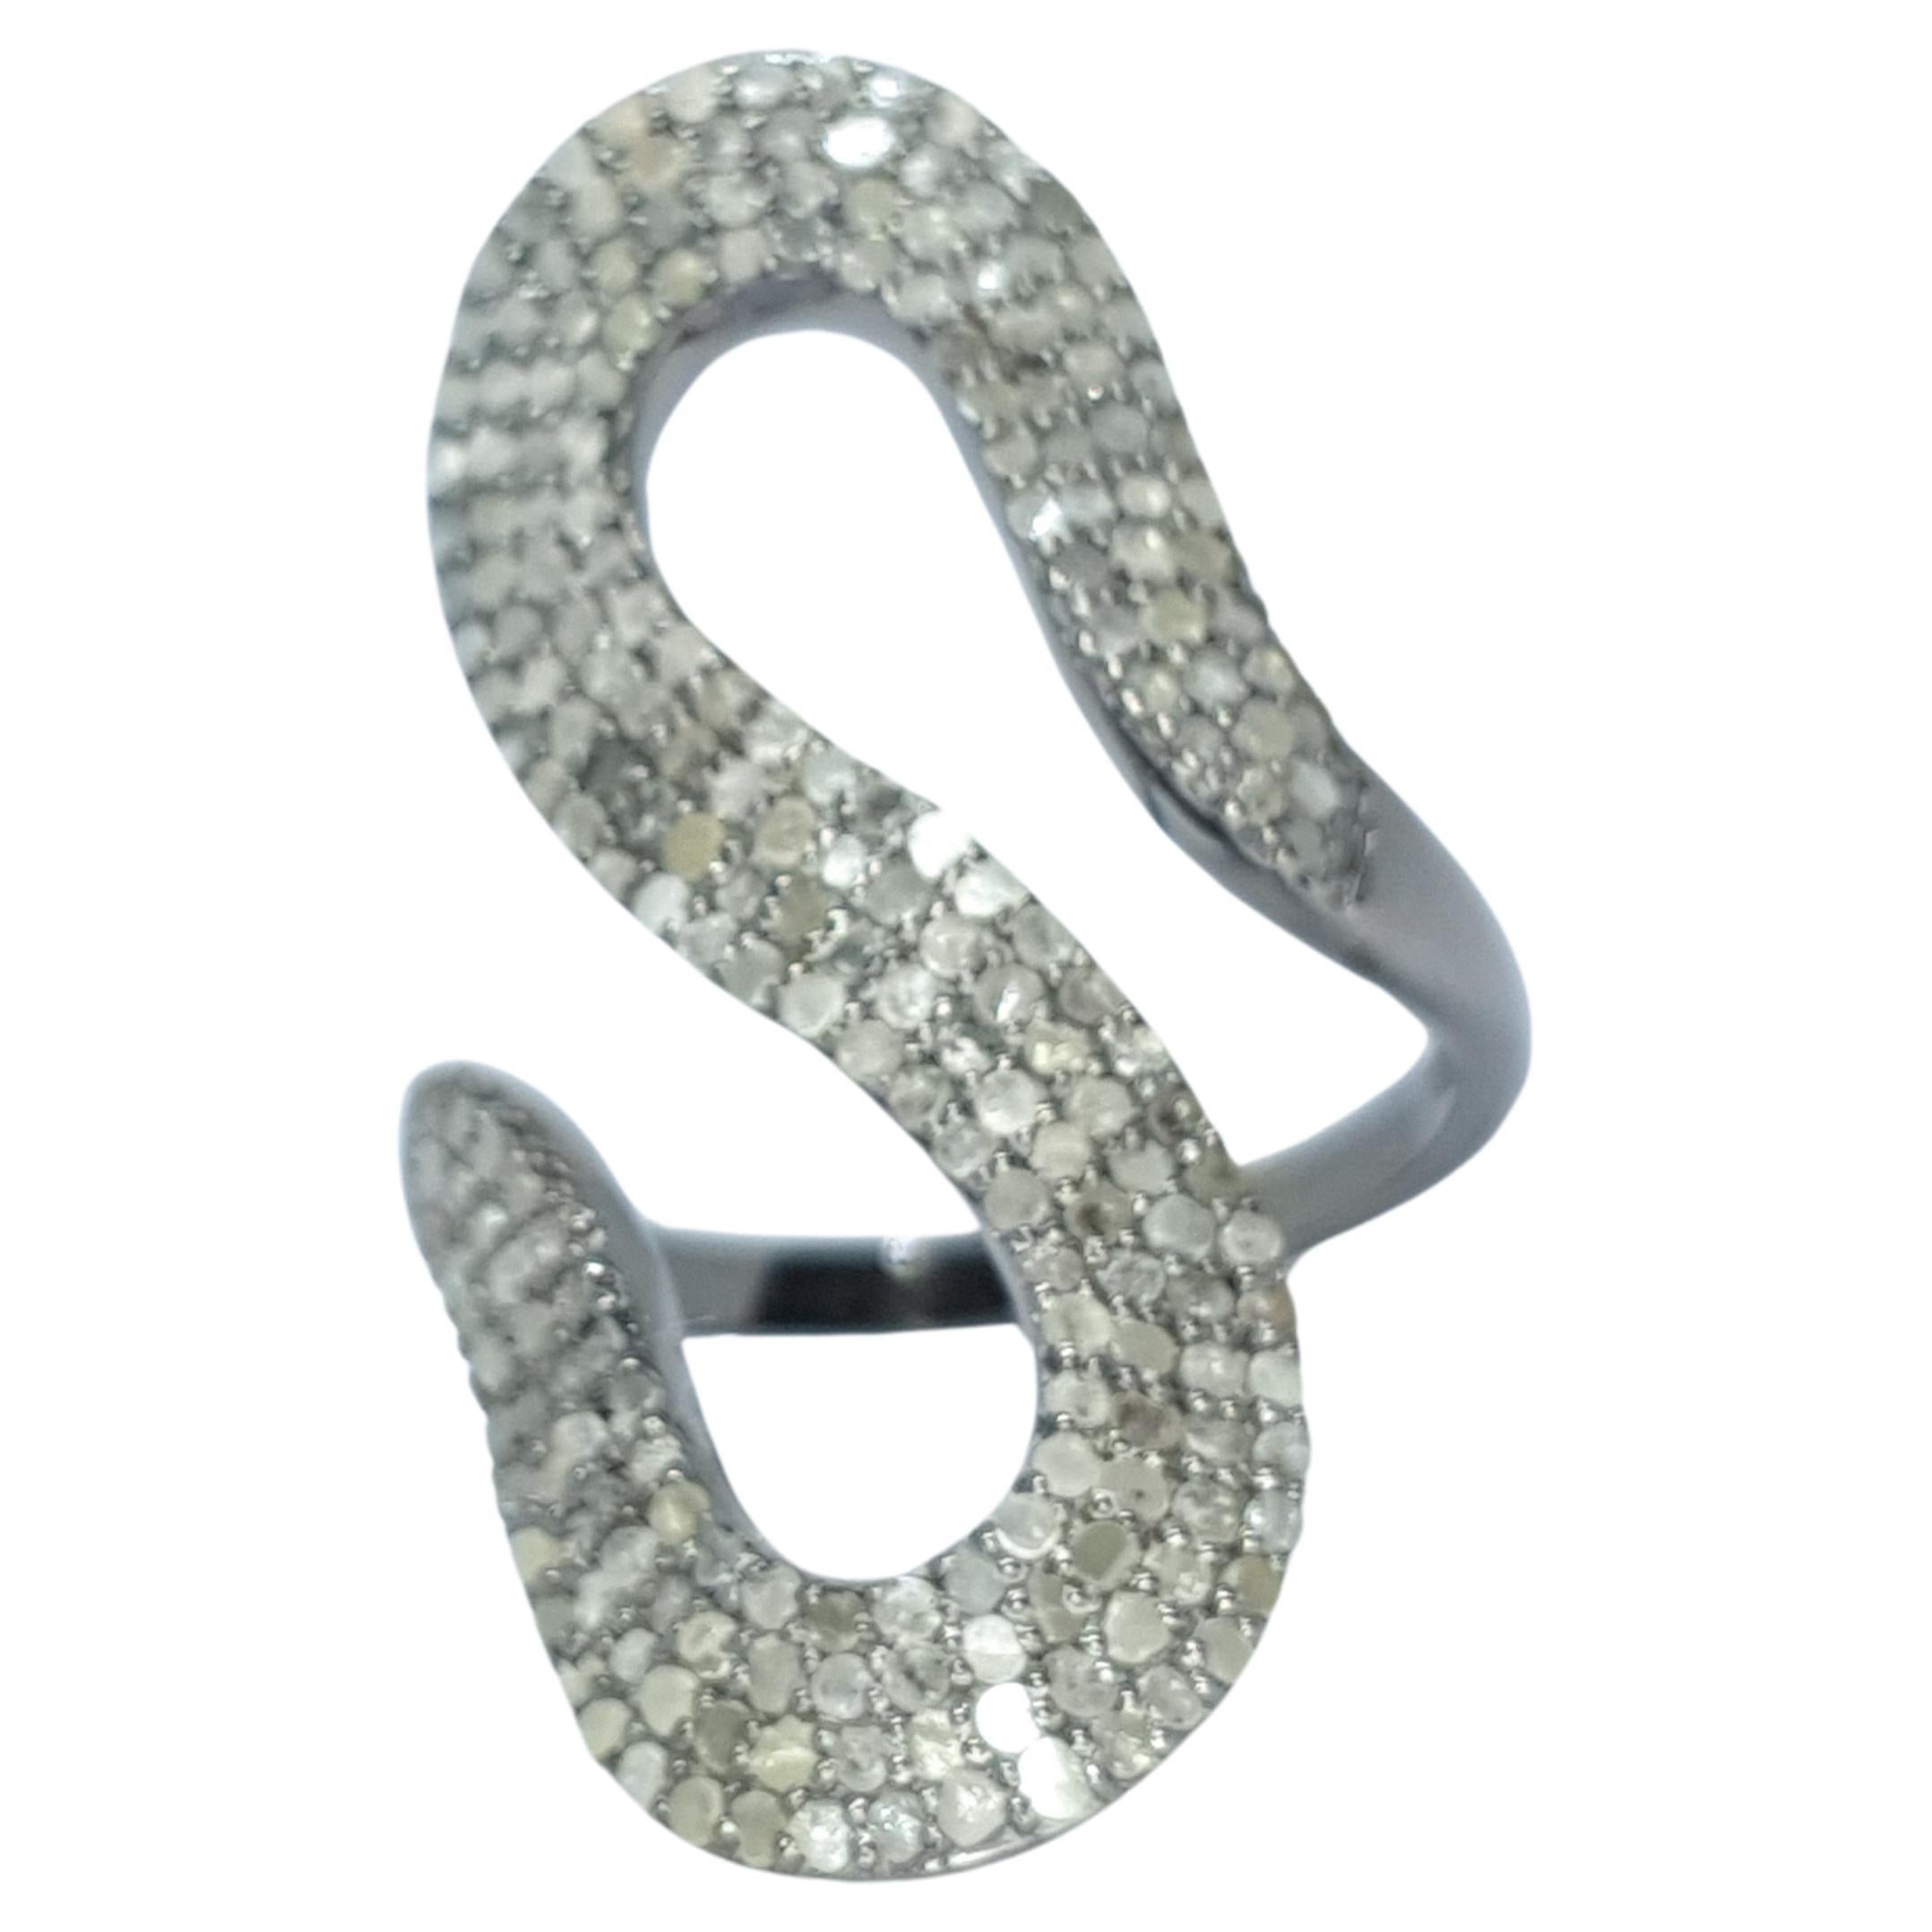 Pave Diamond Snake Shape Statement Ring For Christmas Gift For Women.